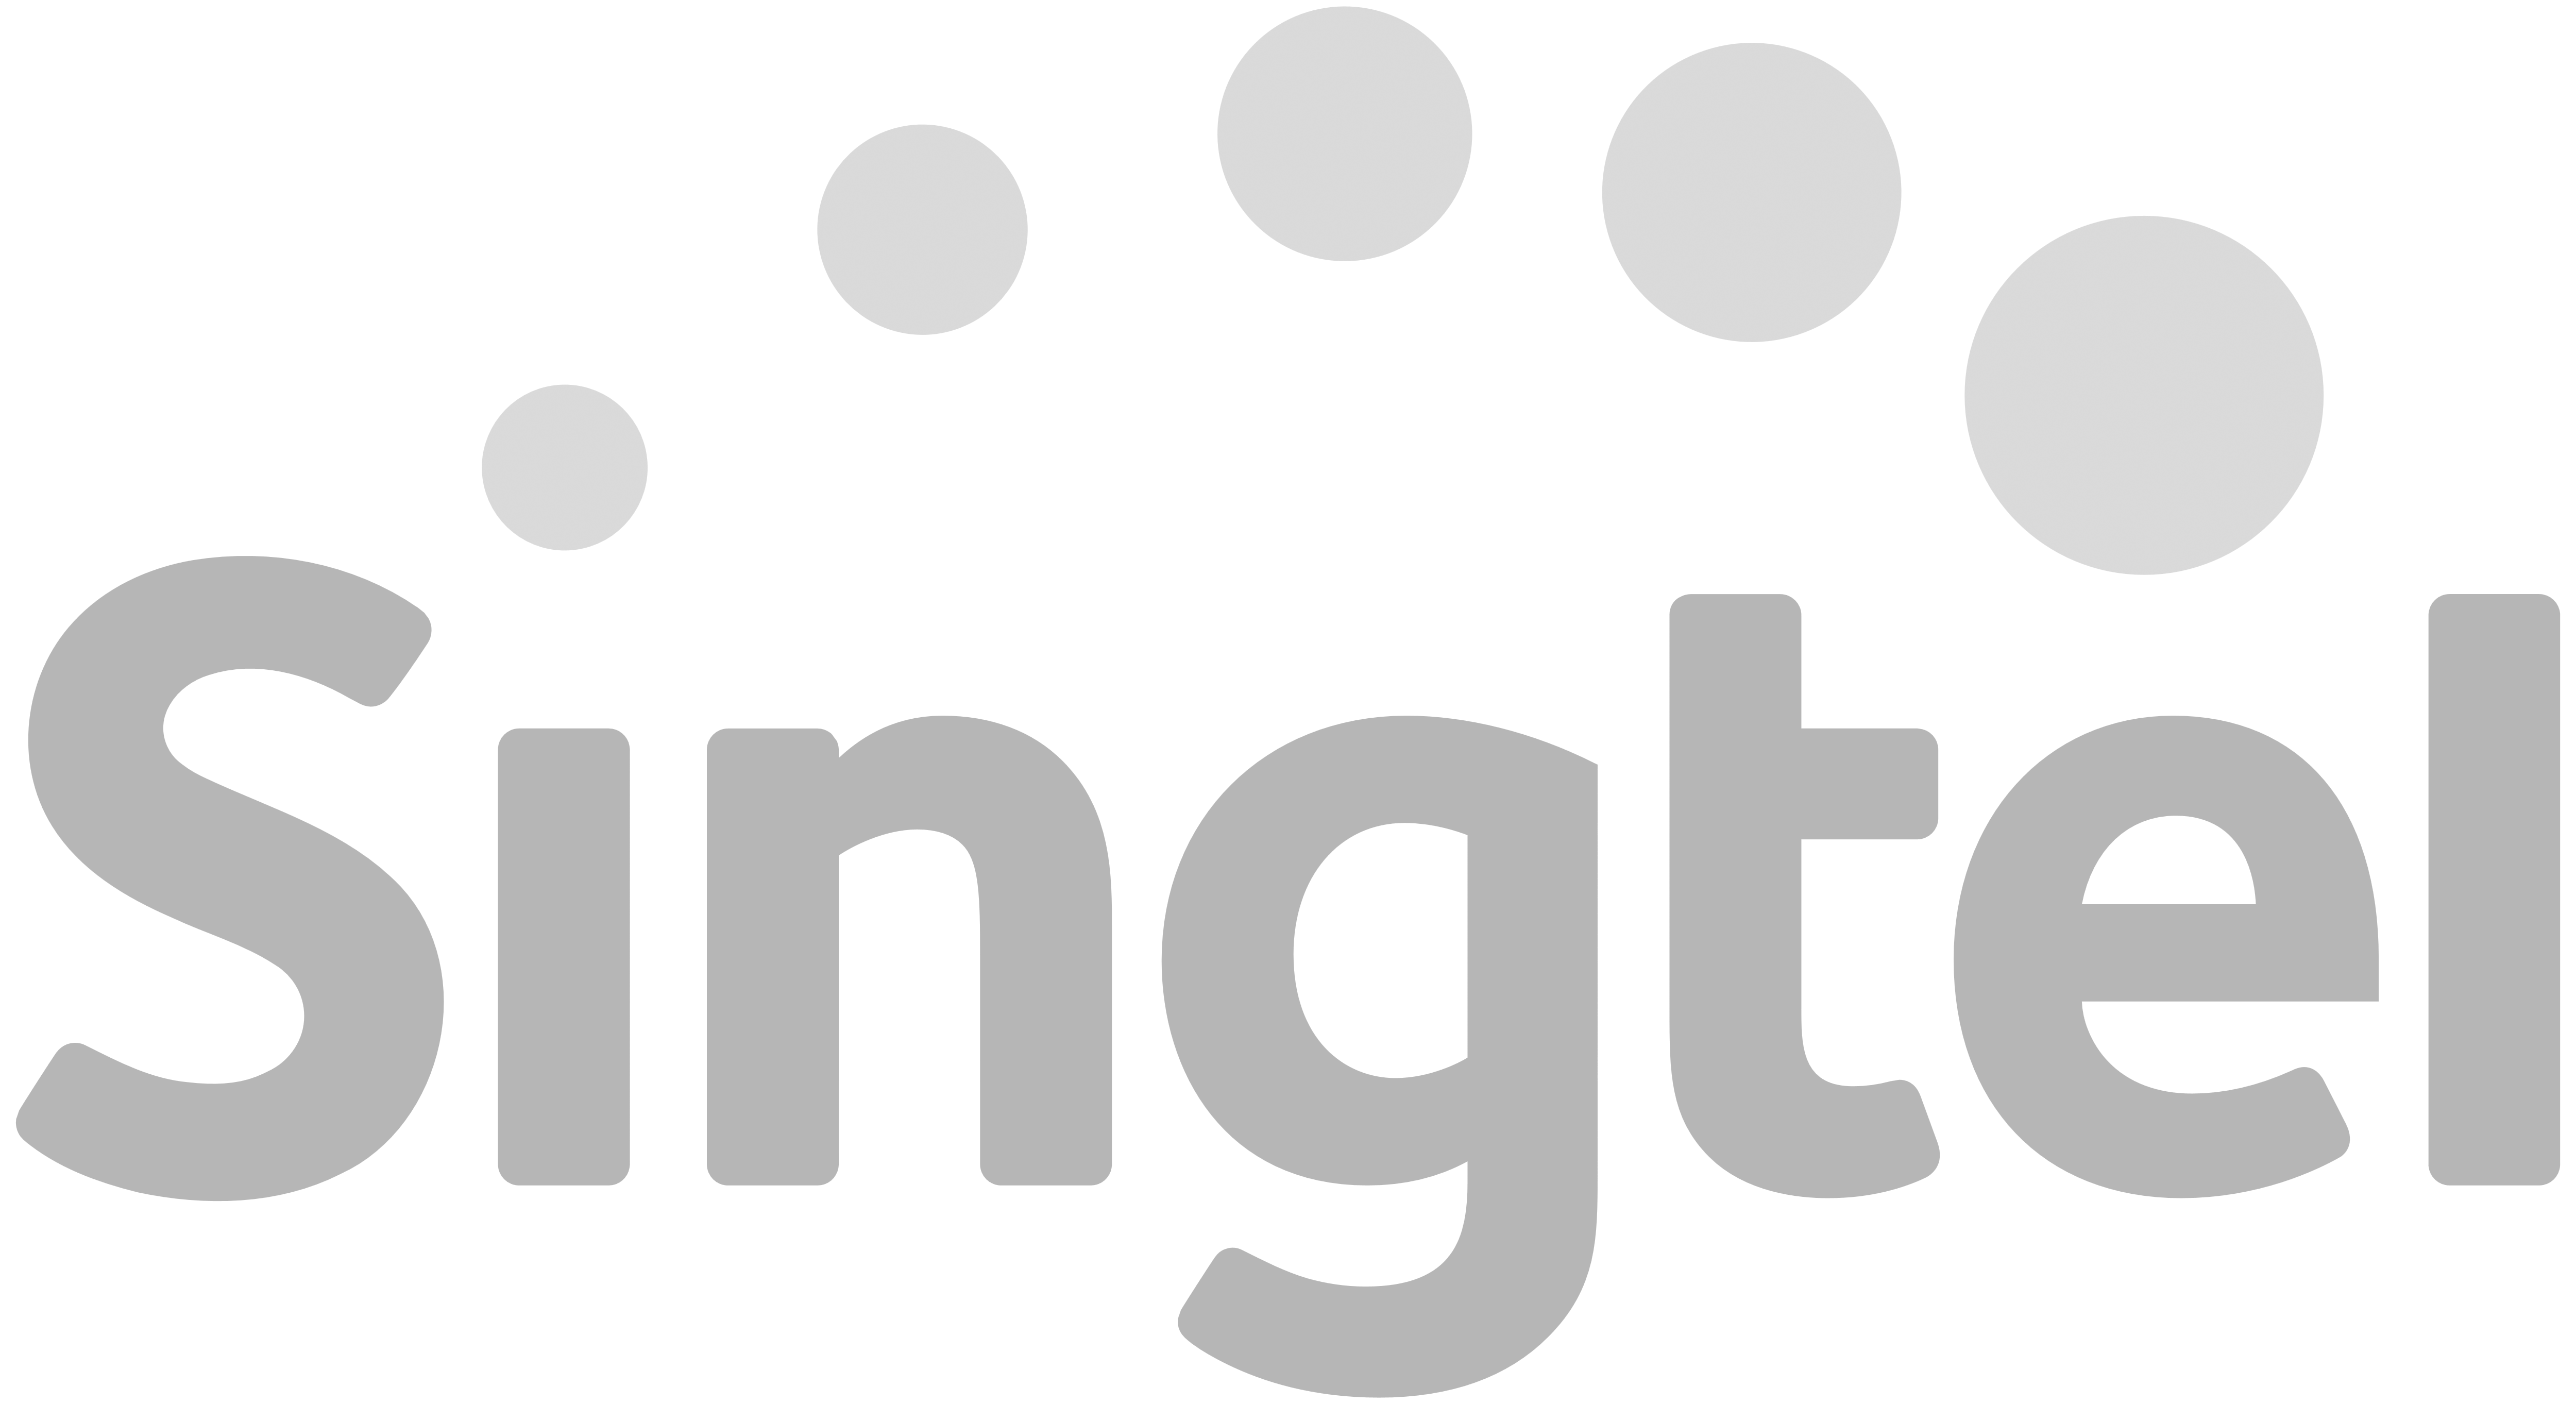 File:Singtel Logo New.png